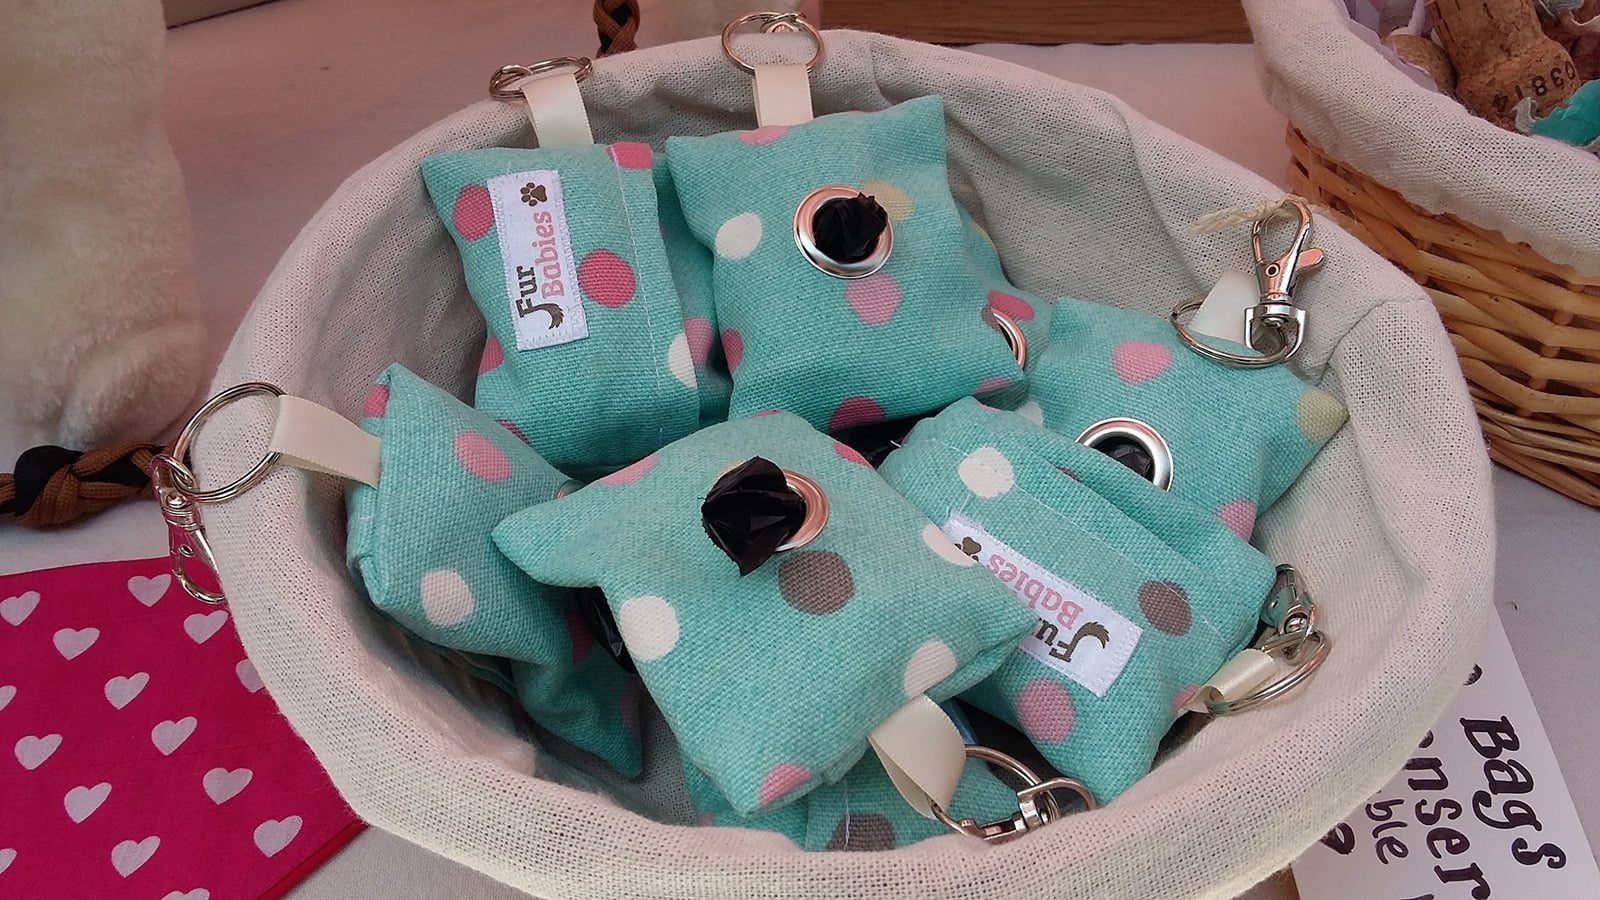 fur babies handmade dog poo bag holders